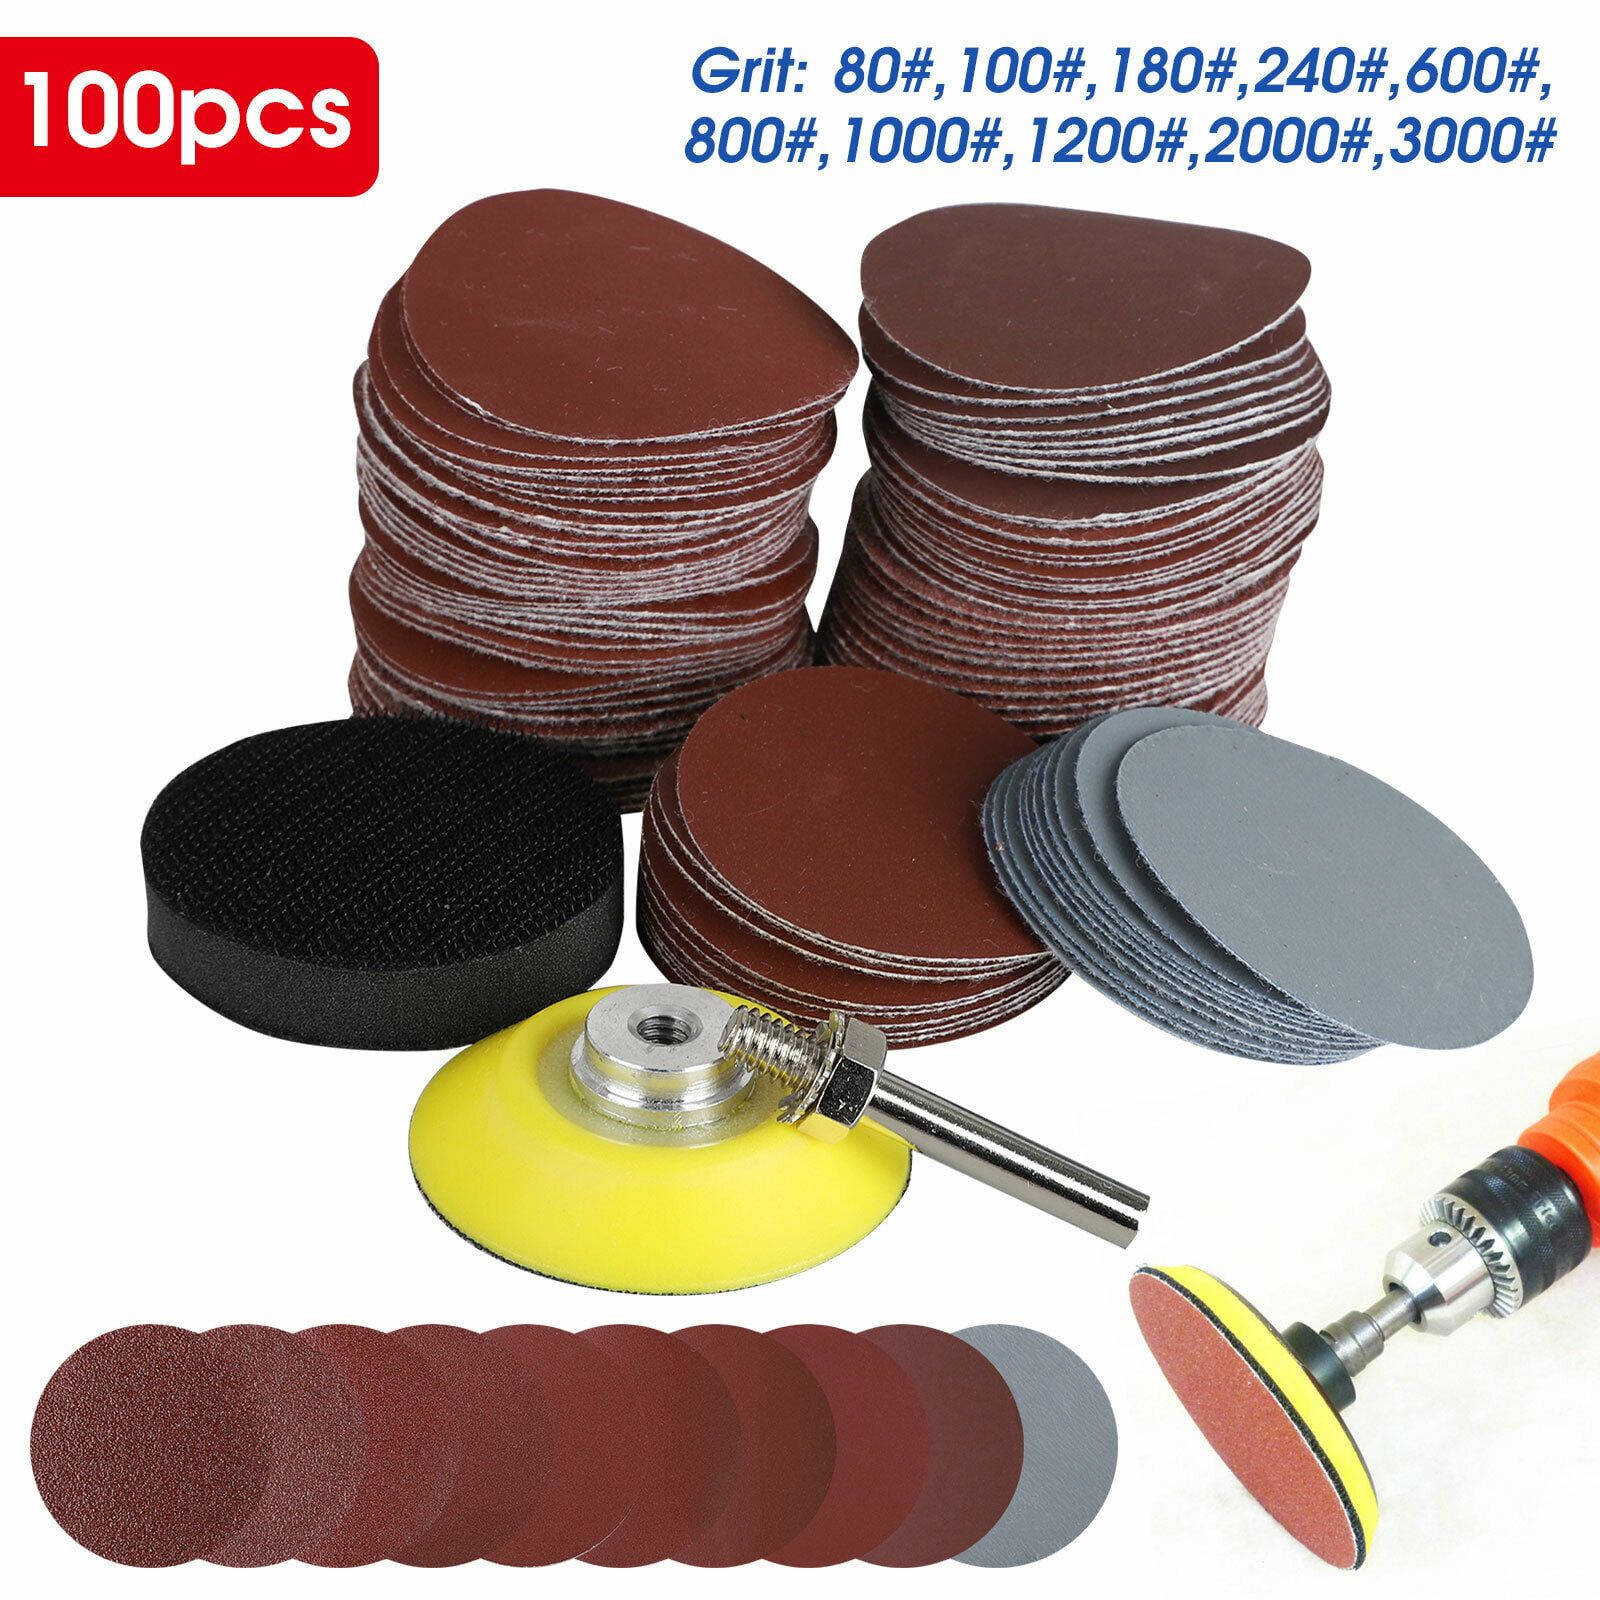 100 Sanding Disc Sand Paper Hook Loop Sander Kit M6 Drill Adapter & Backer Pad